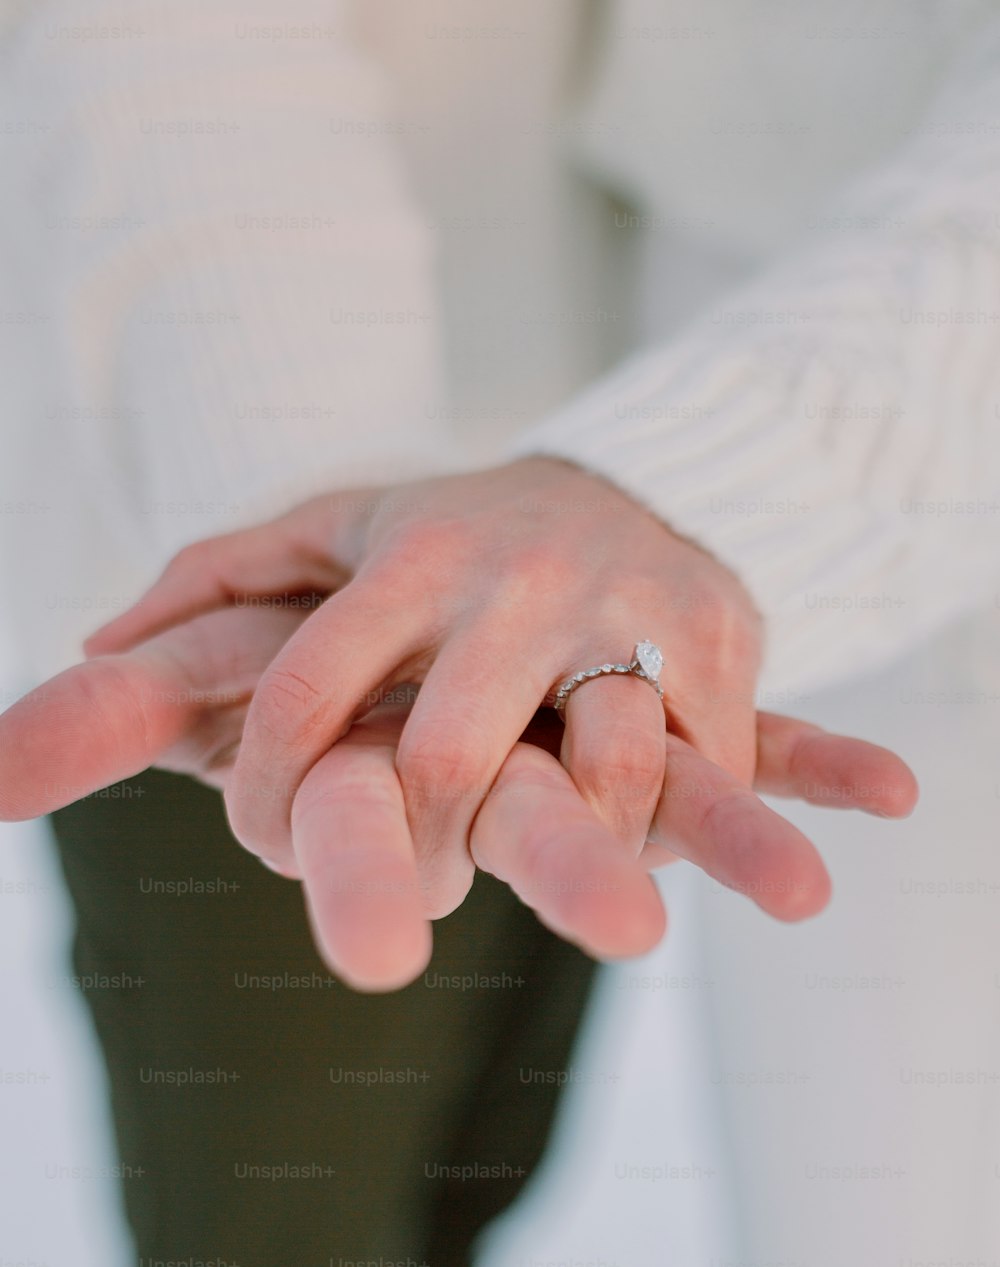 Un primer plano de una persona sosteniendo un anillo de bodas